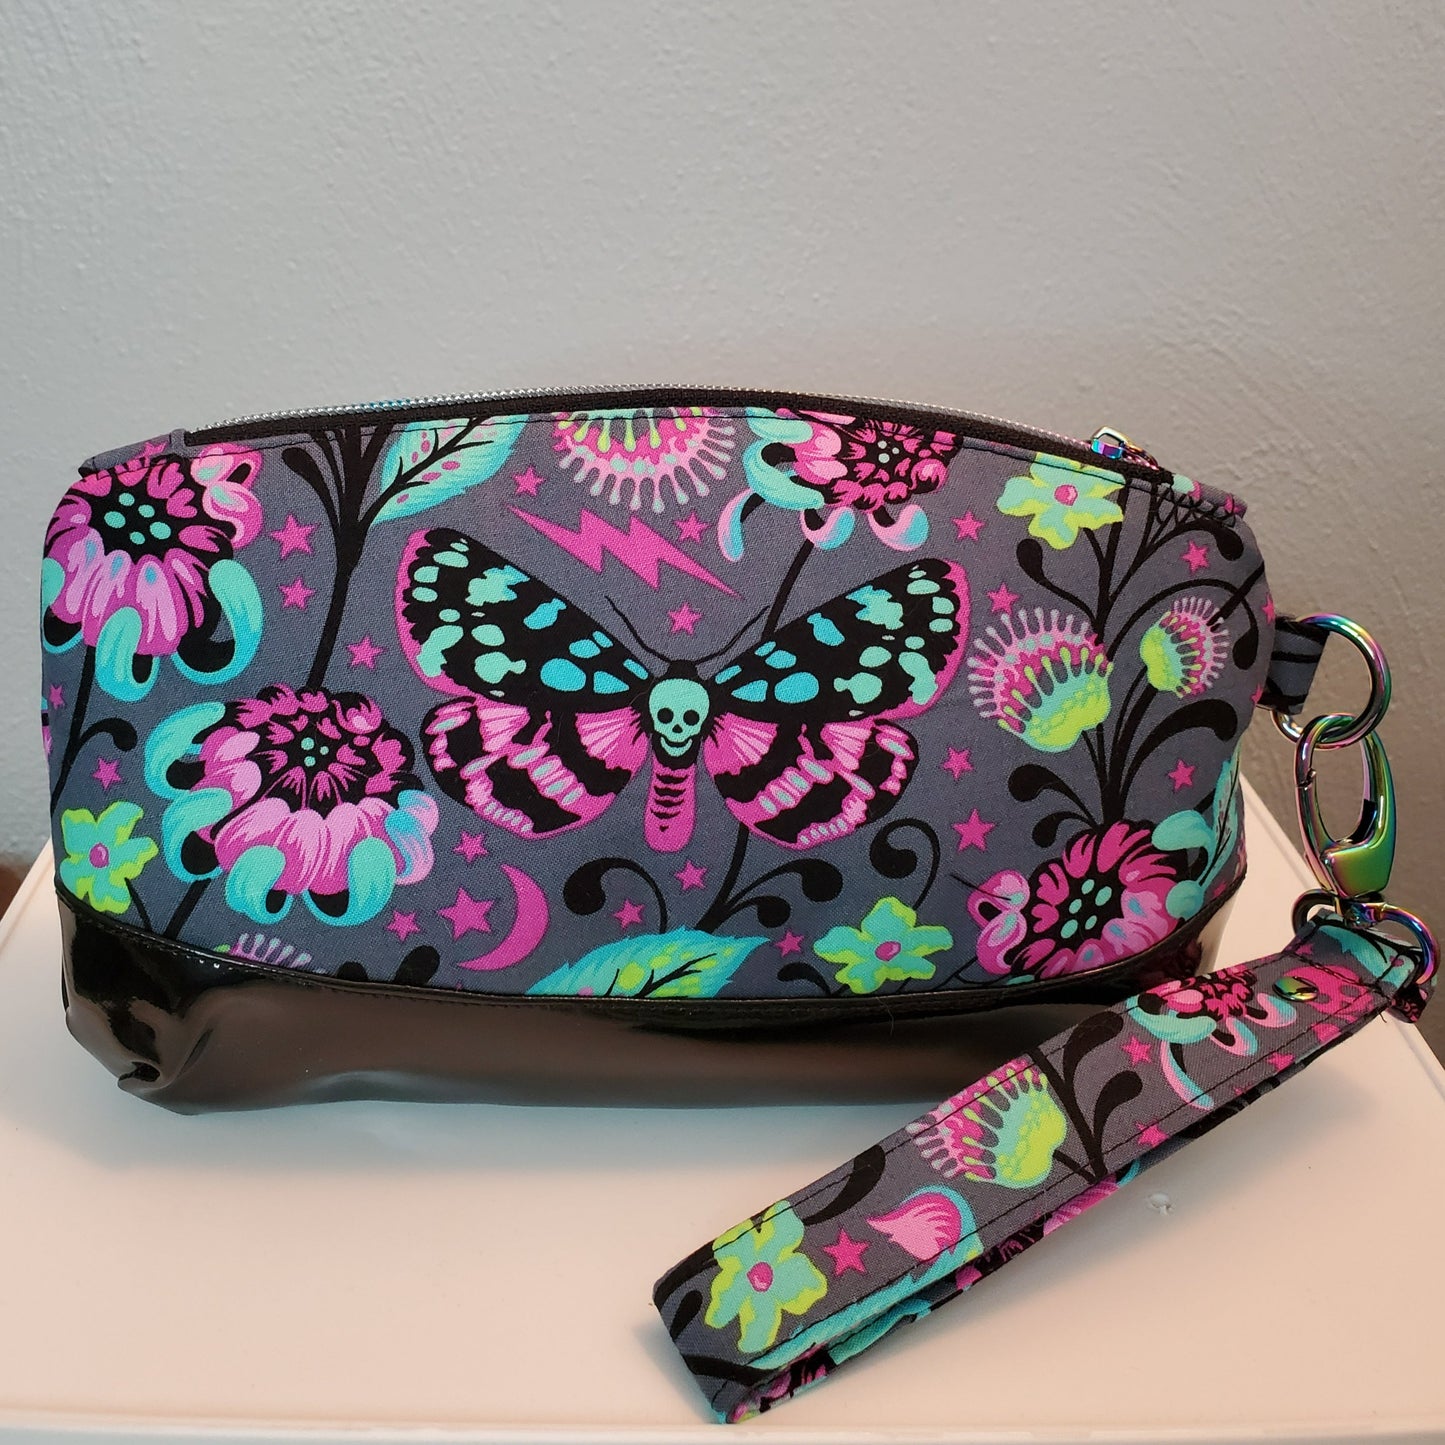 Tula Pink Fabric Wristlet Clutch Bag